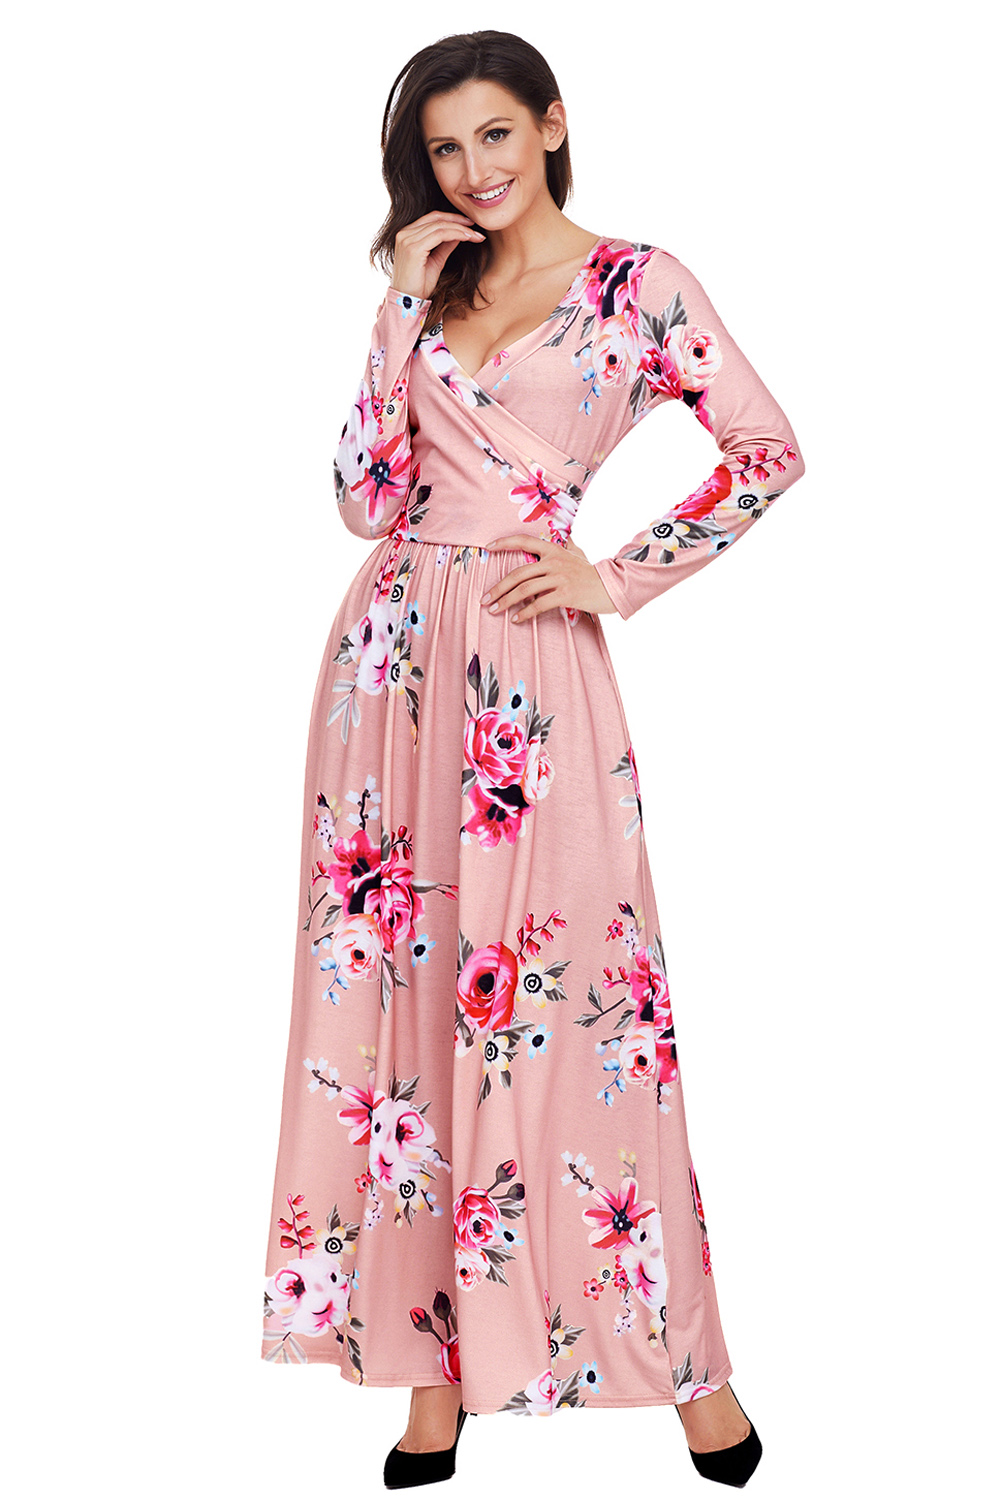 BY61772-10 Mauve Floral Surplice Long Sleeve Maxi Boho Dress